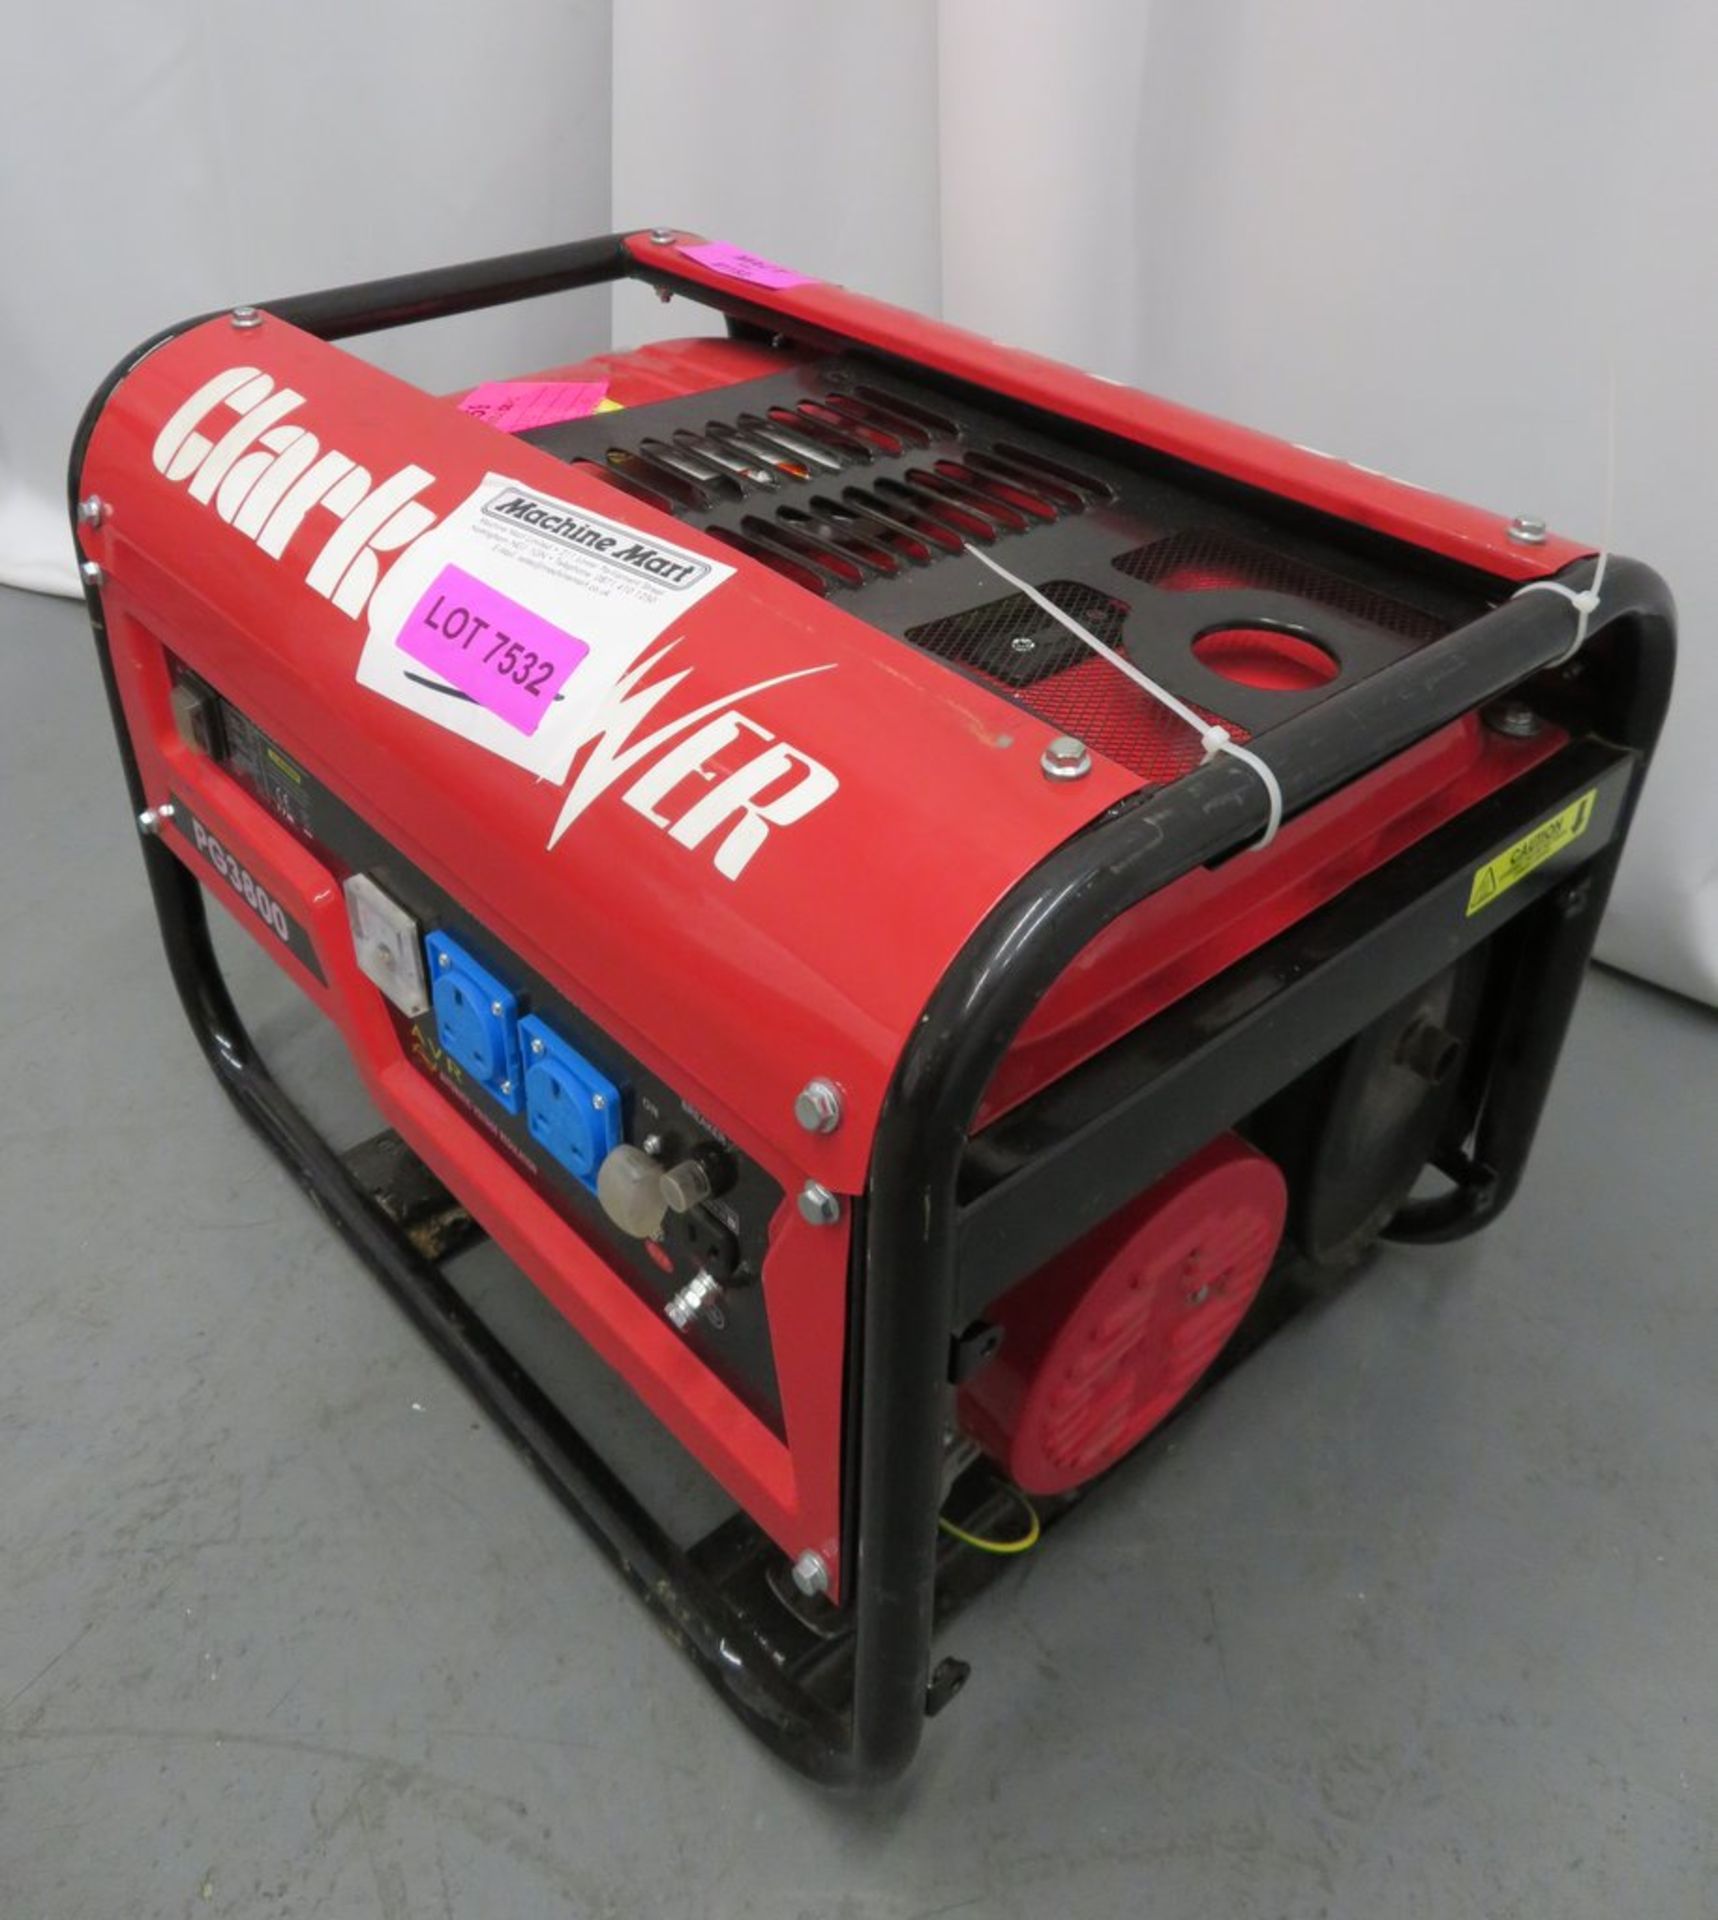 Clarke PG3800 petrol generator, 2.7kw, 230v. - Image 2 of 6